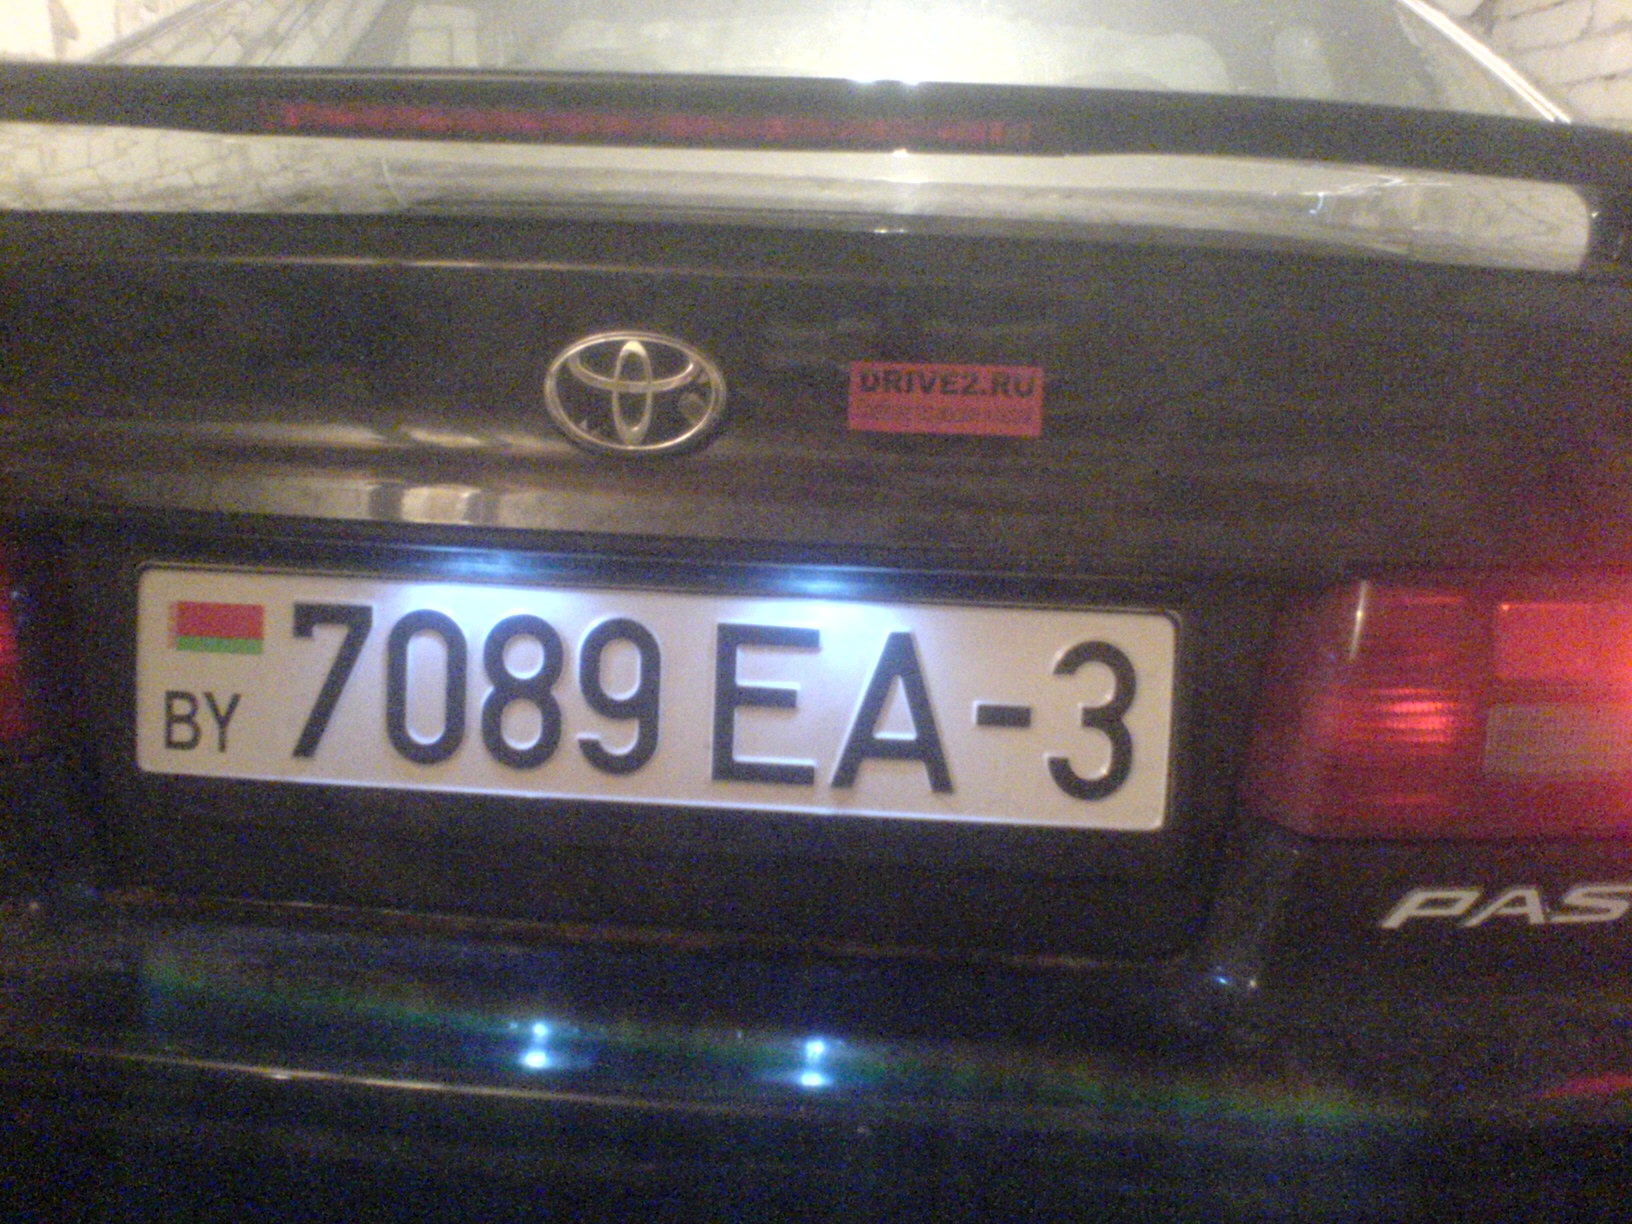      Toyota Paseo 15 1999